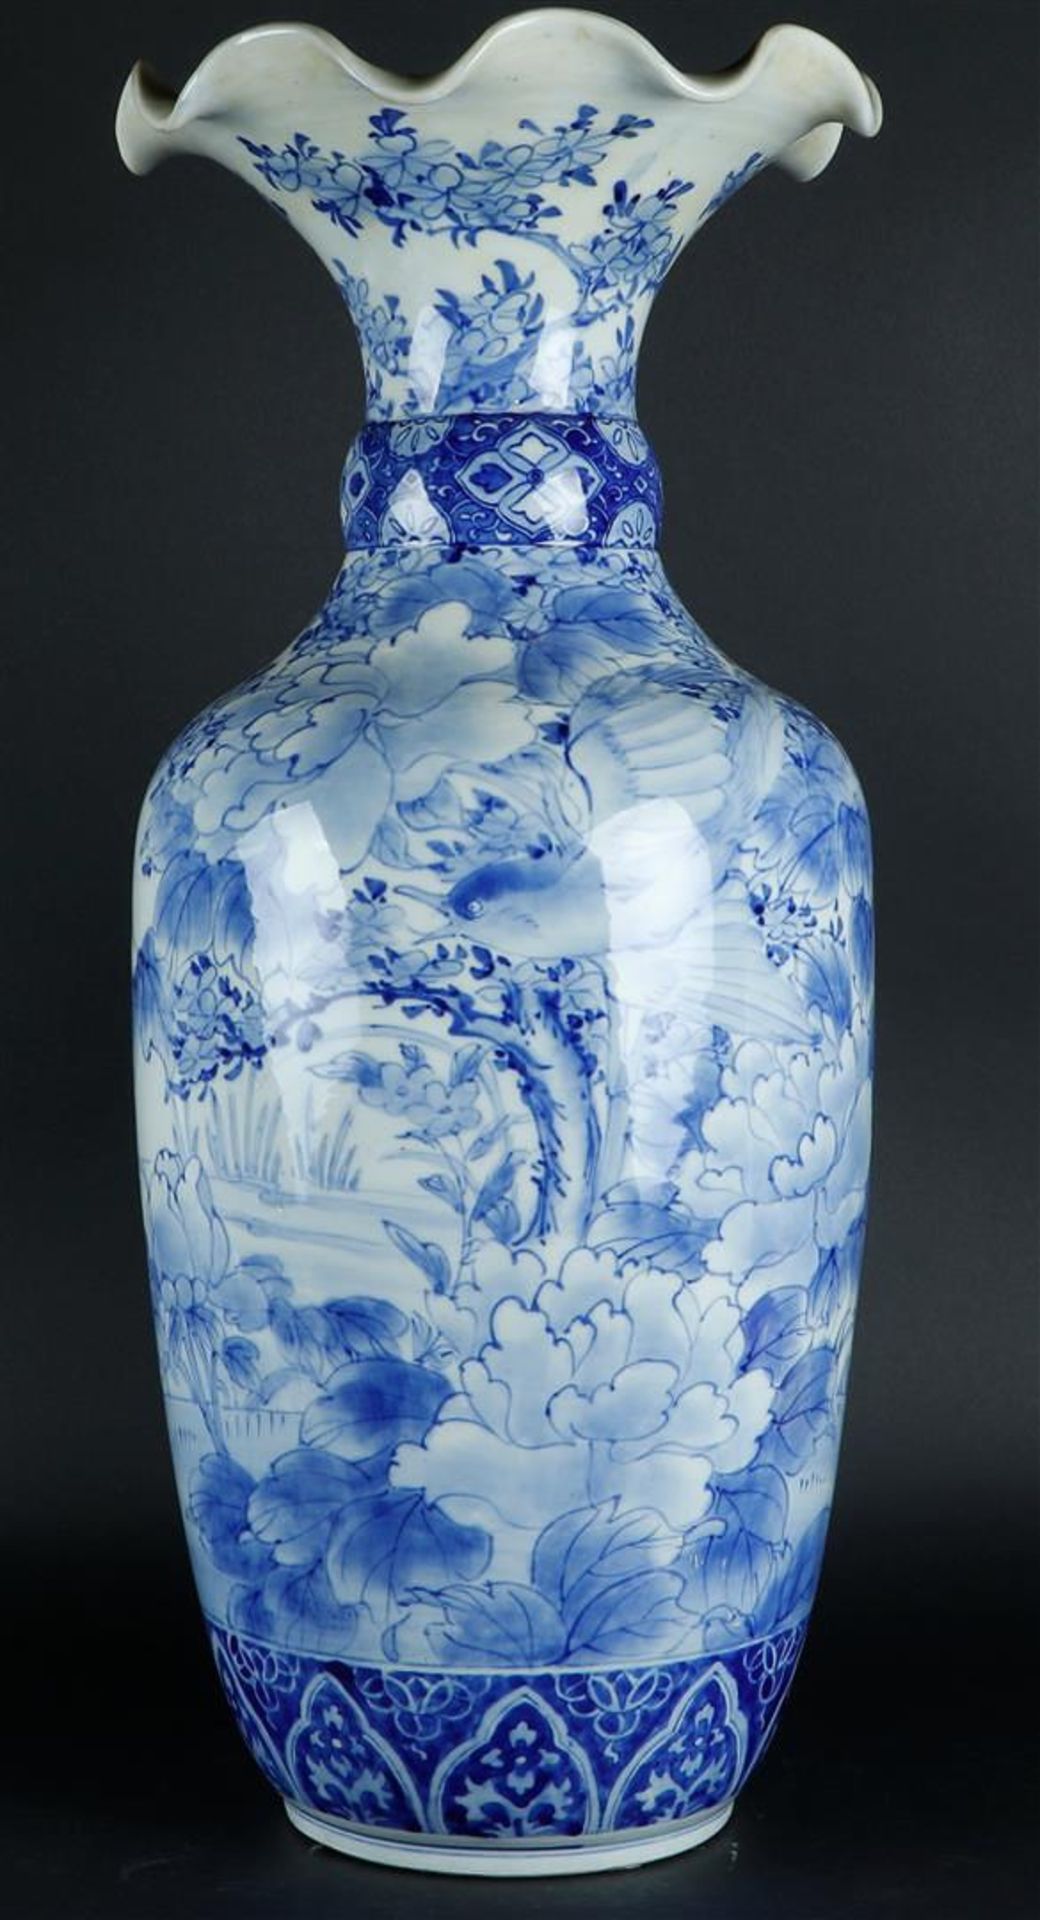 A porcelain collar vase with floral decor, Japan 19th century.